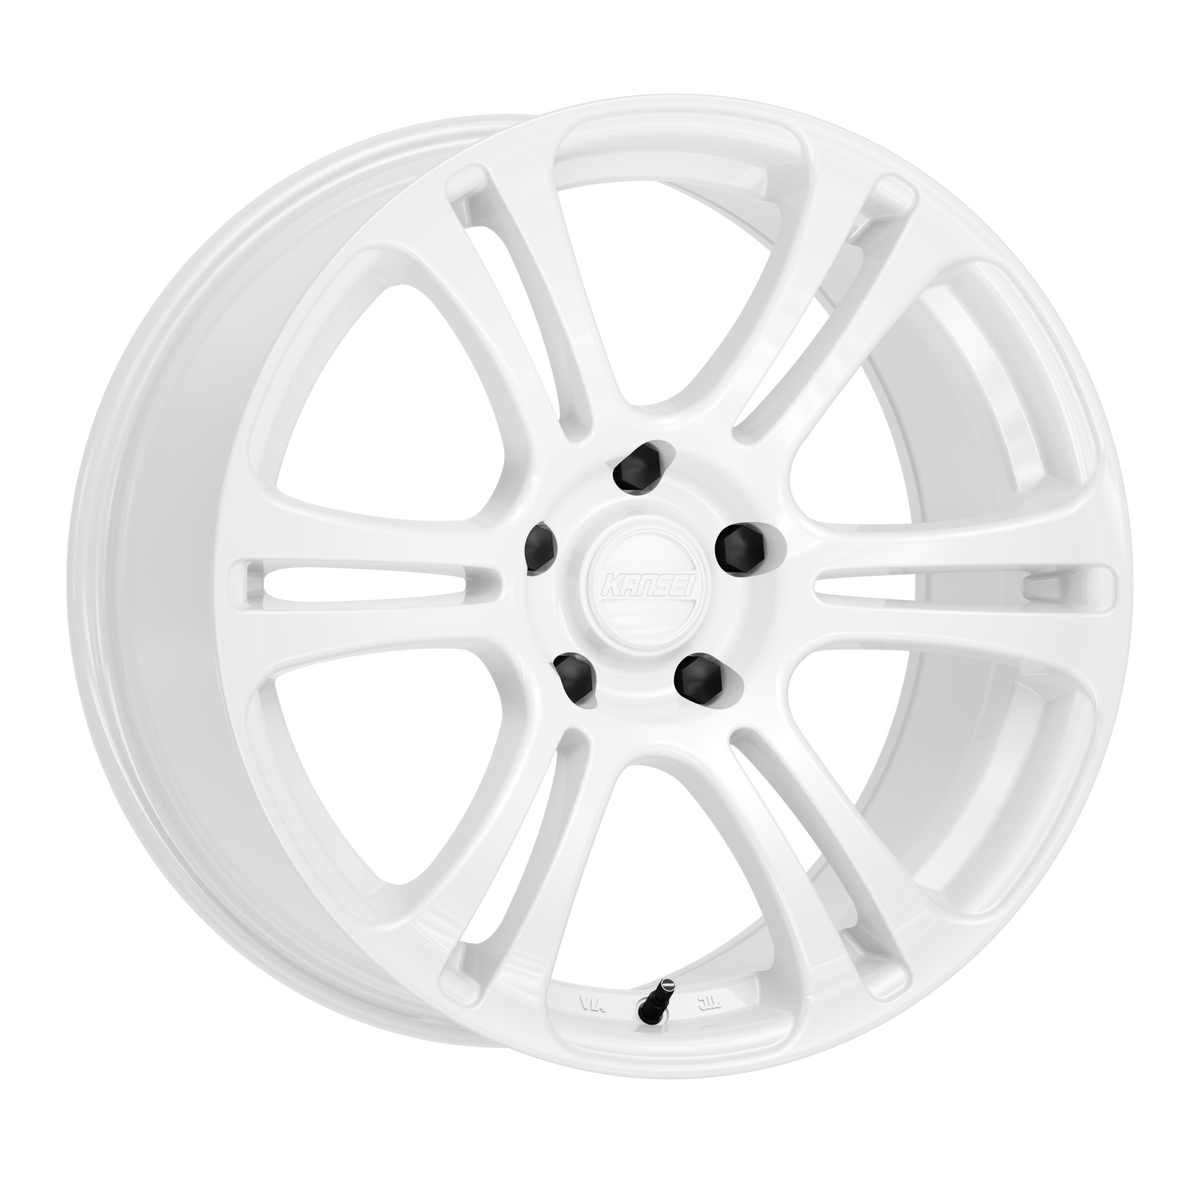 K16W NEO Wheel, Size: 18" x 10.50", Bolt Pattern: 5 x 114.300 mm, Backspace: 6.62" [Finish: Gloss White]